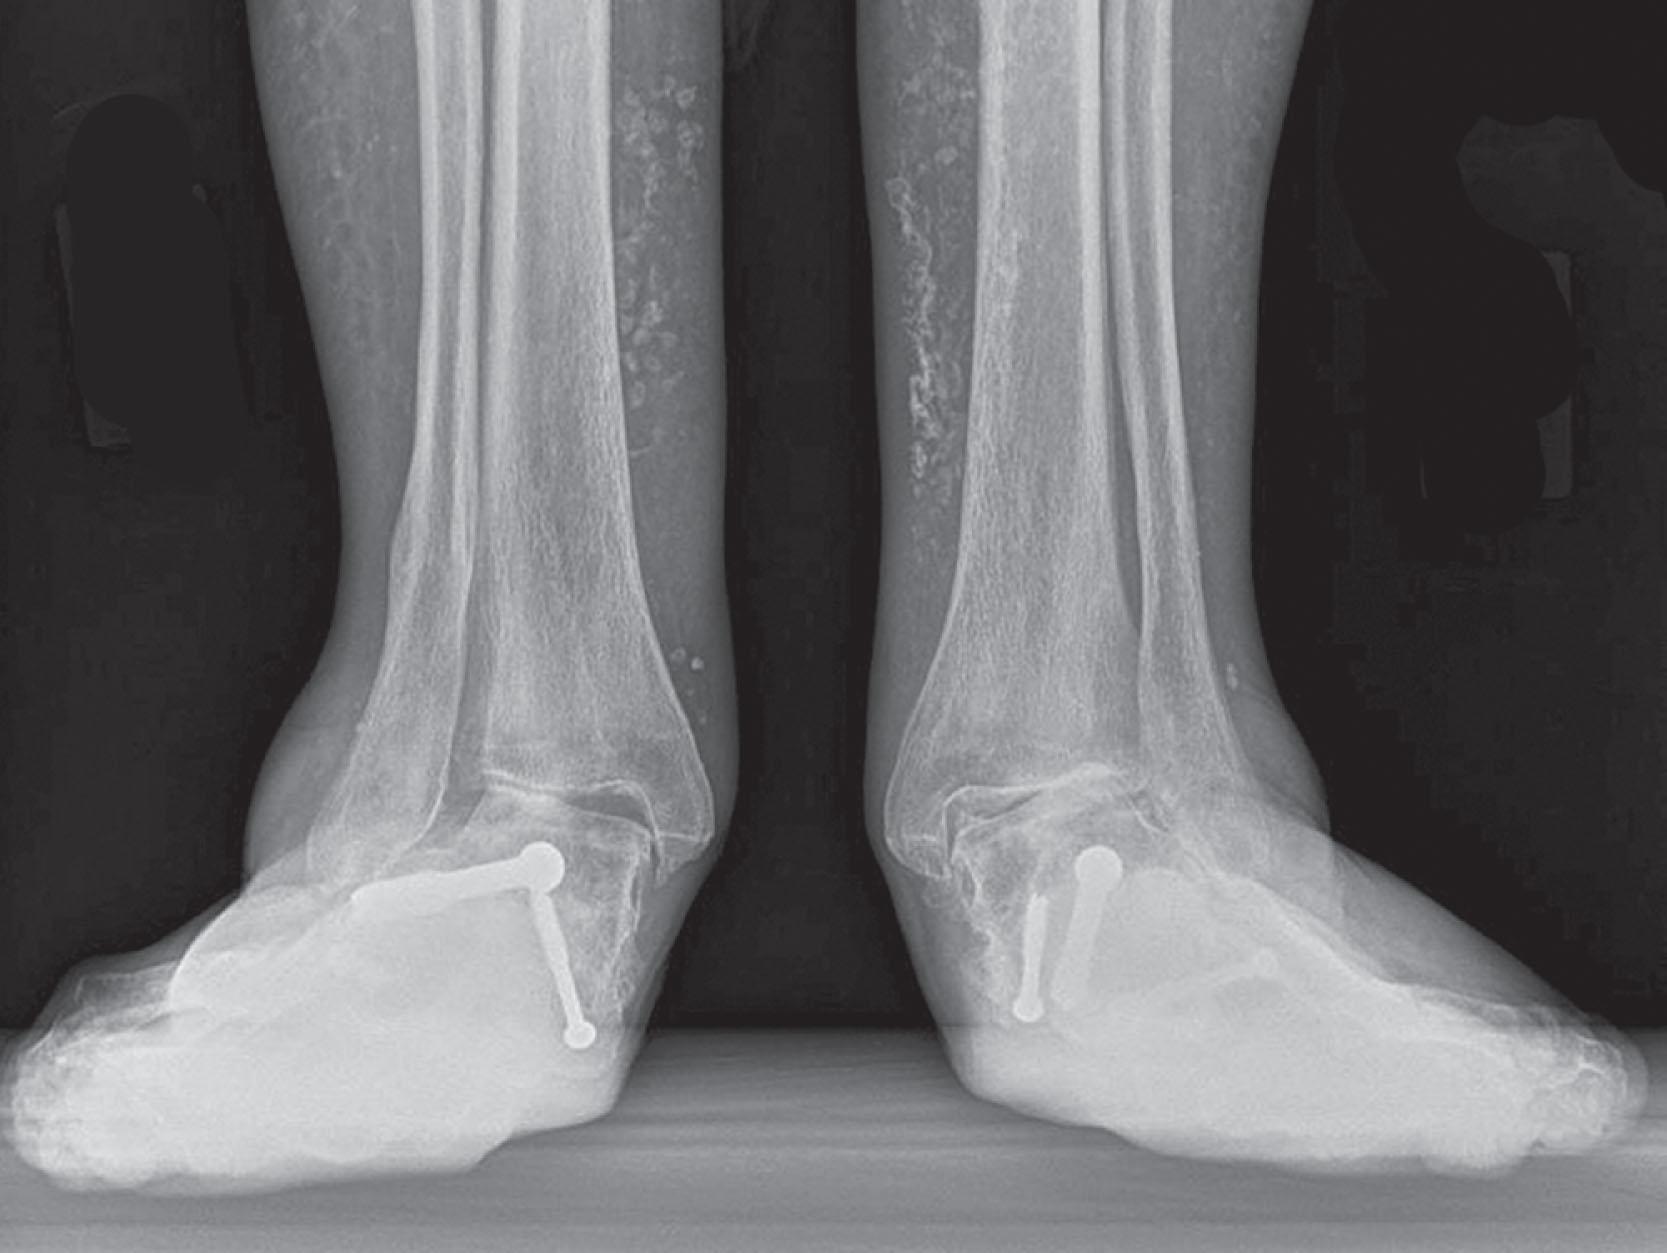 Fig. 21-28, Radiographs depicting bilateral incongruent ankle valgus deformities.